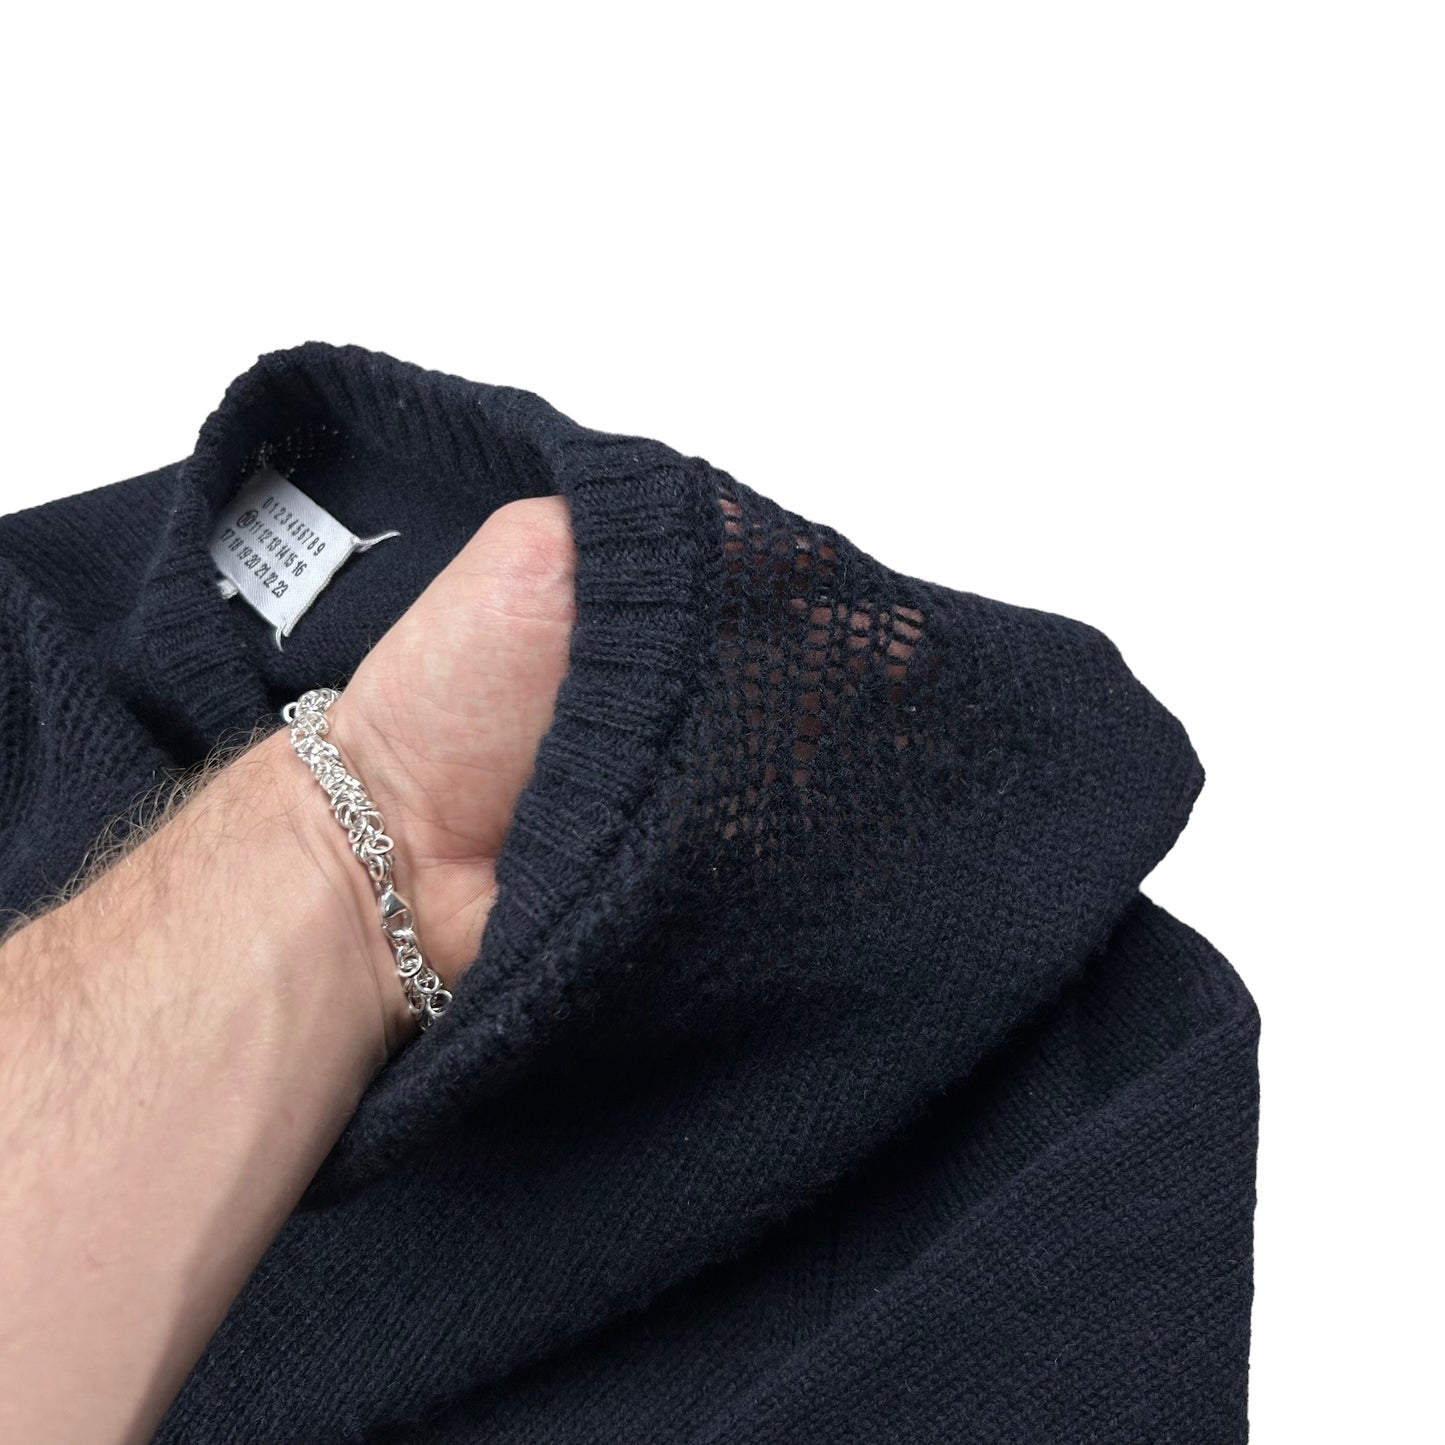 Maison Margiela Spider Web Knit Sweater - AW17